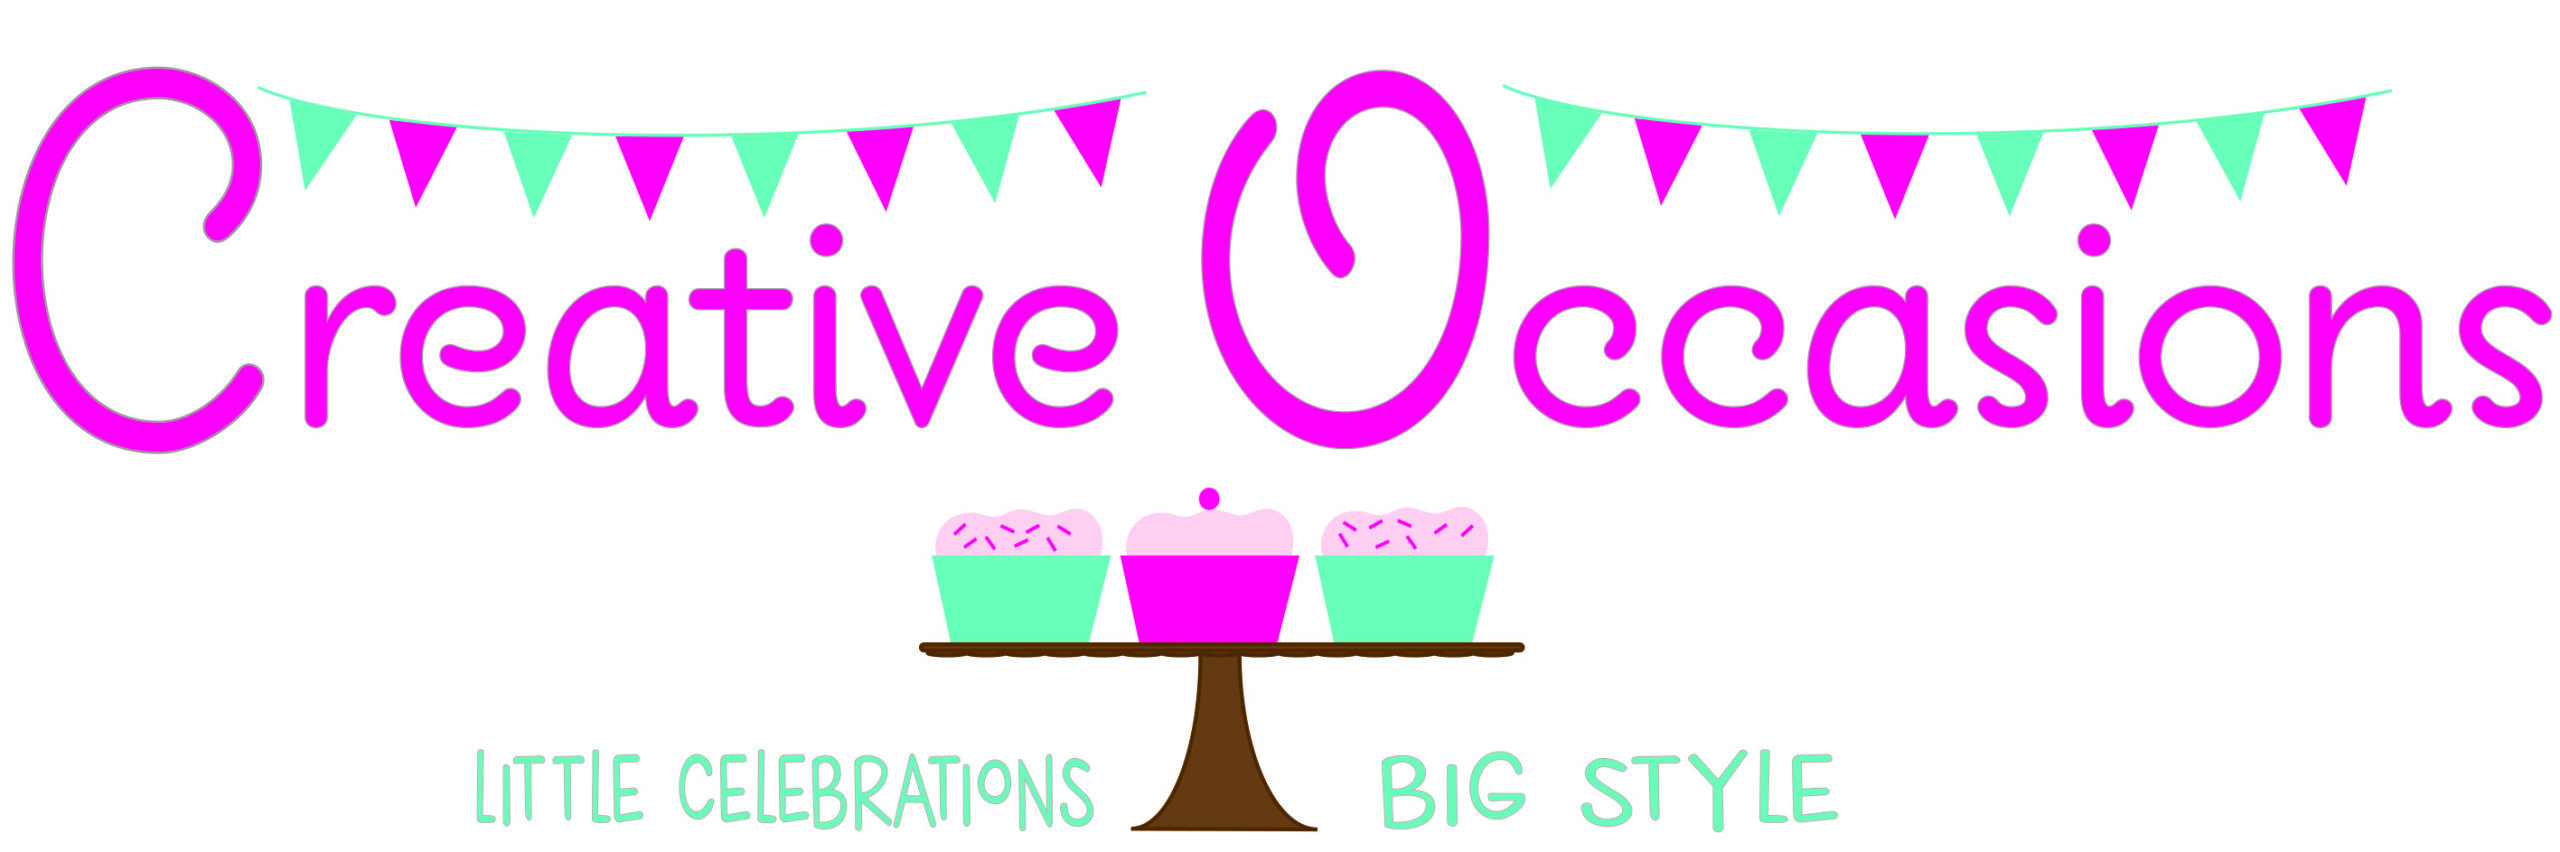 Creative Occasions_Logo